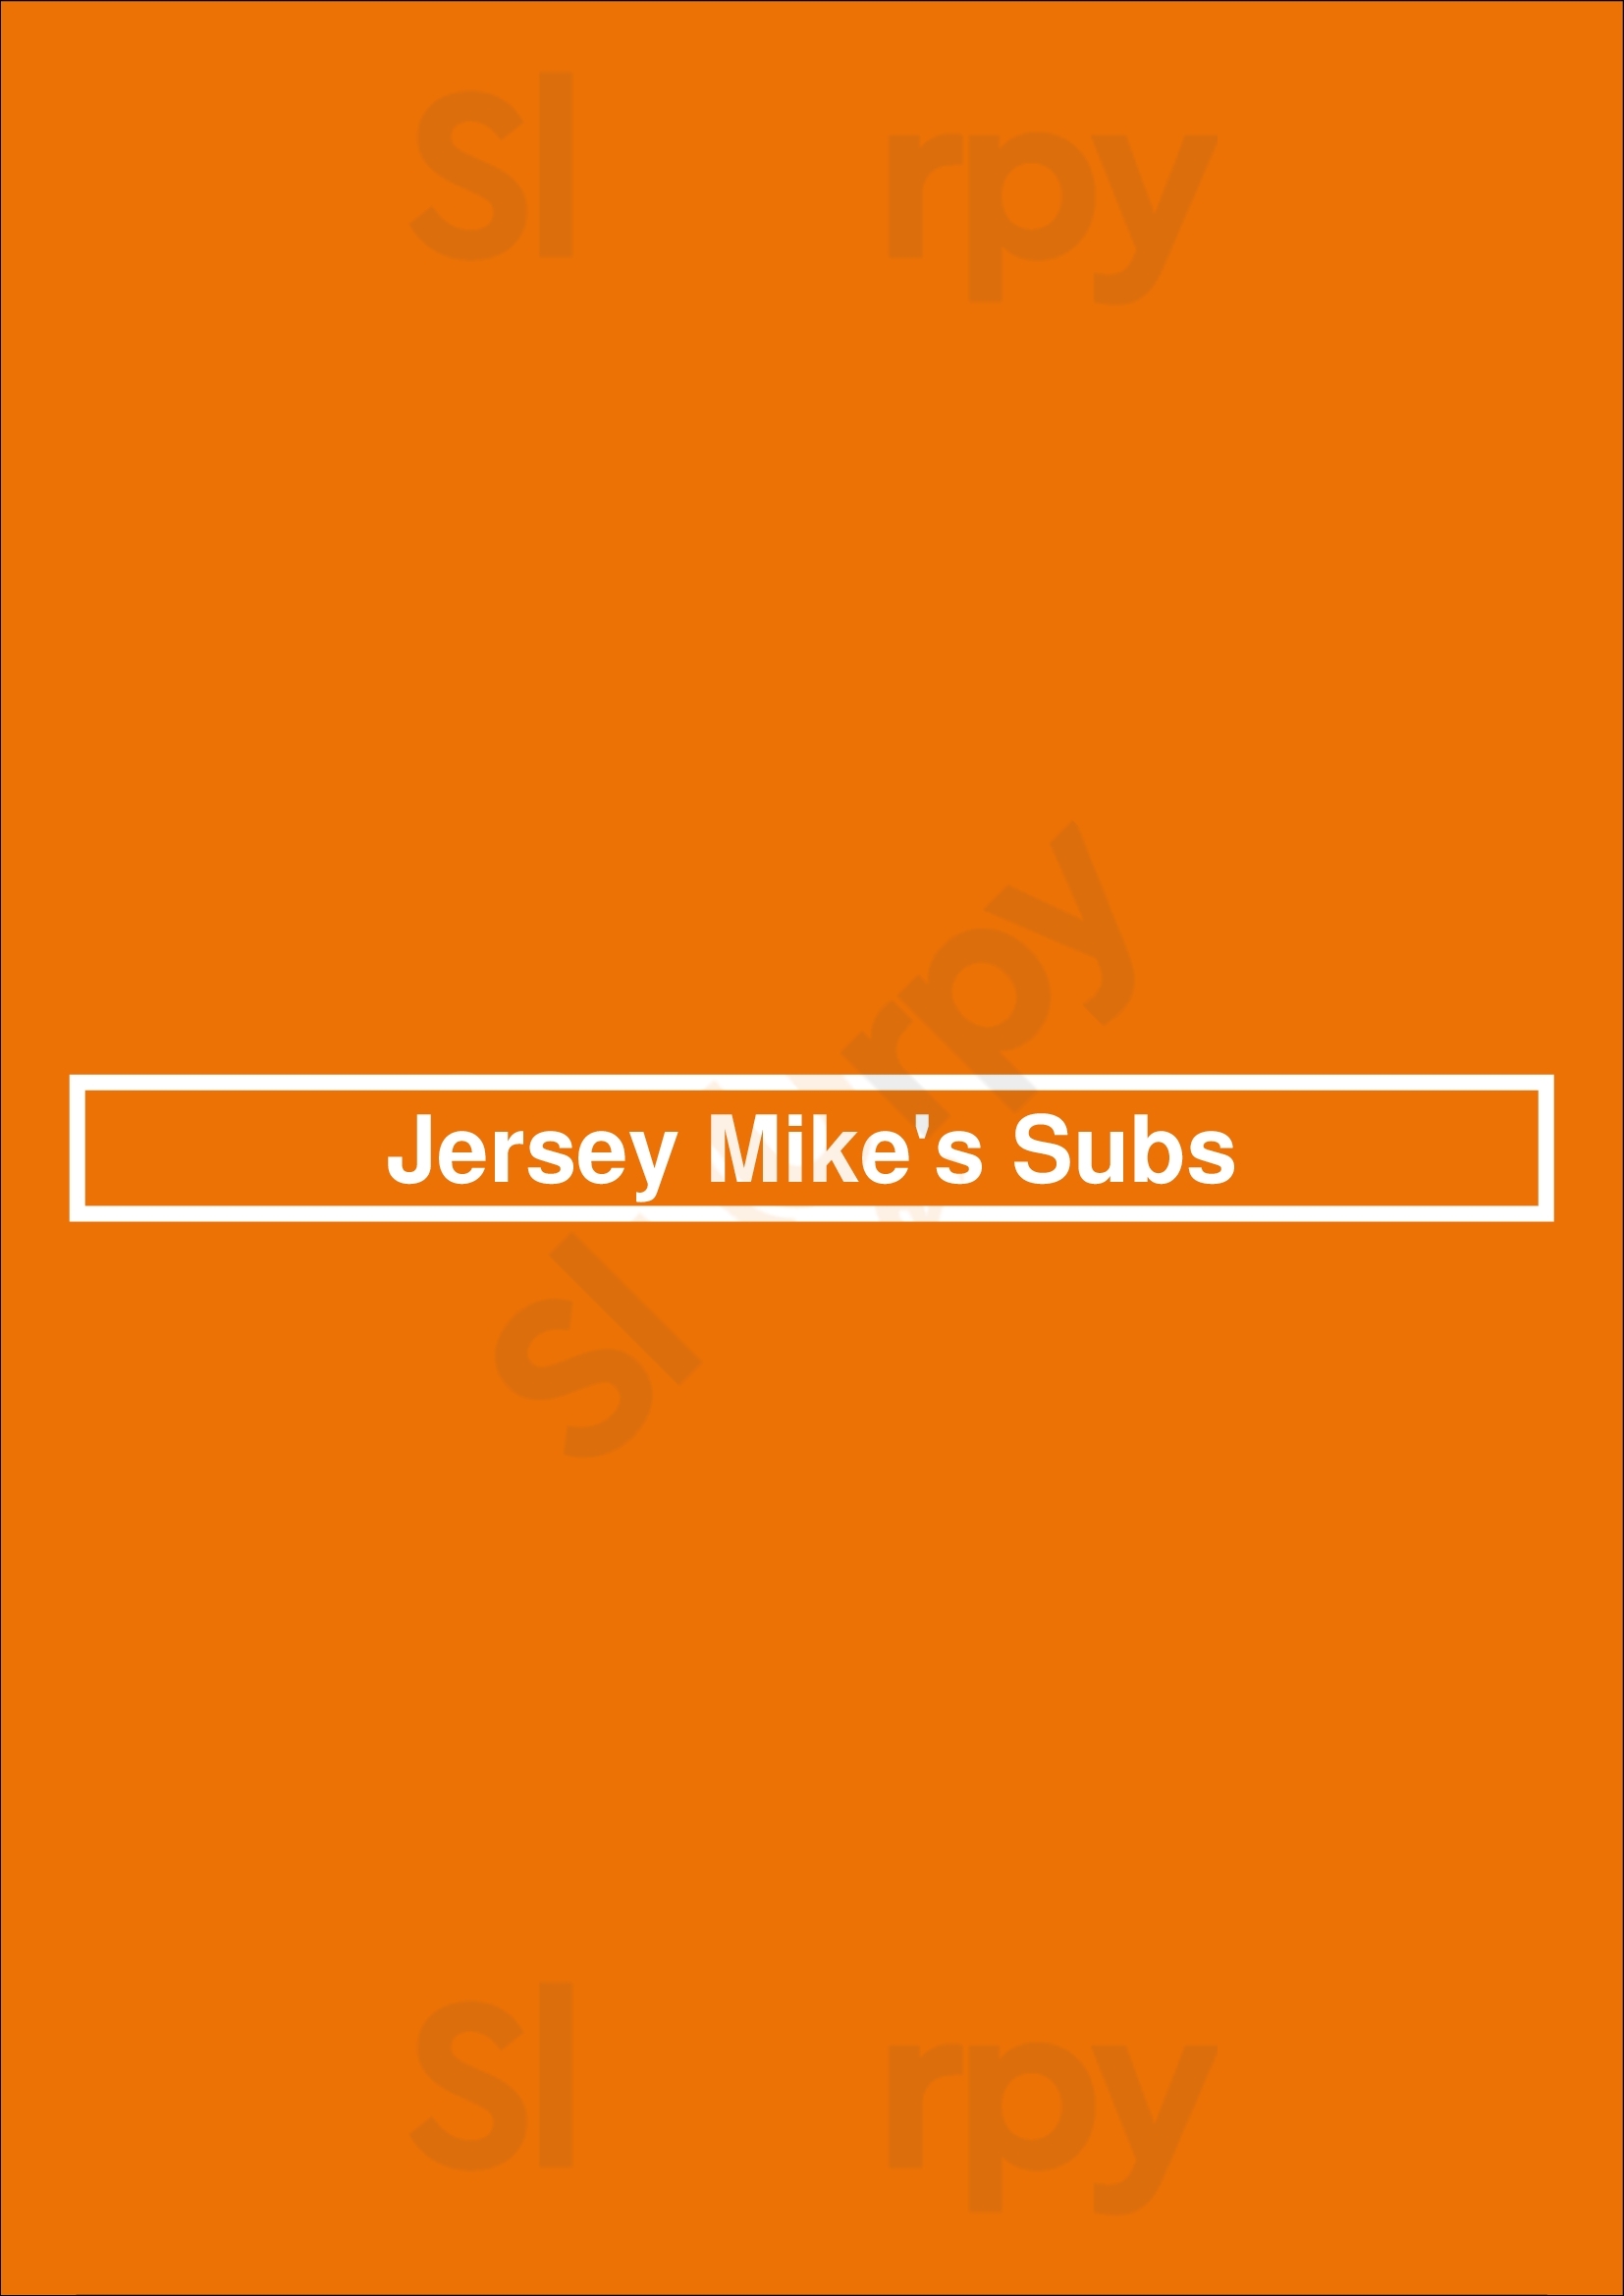 Jersey Mike's Subs St. Petersburg Menu - 1